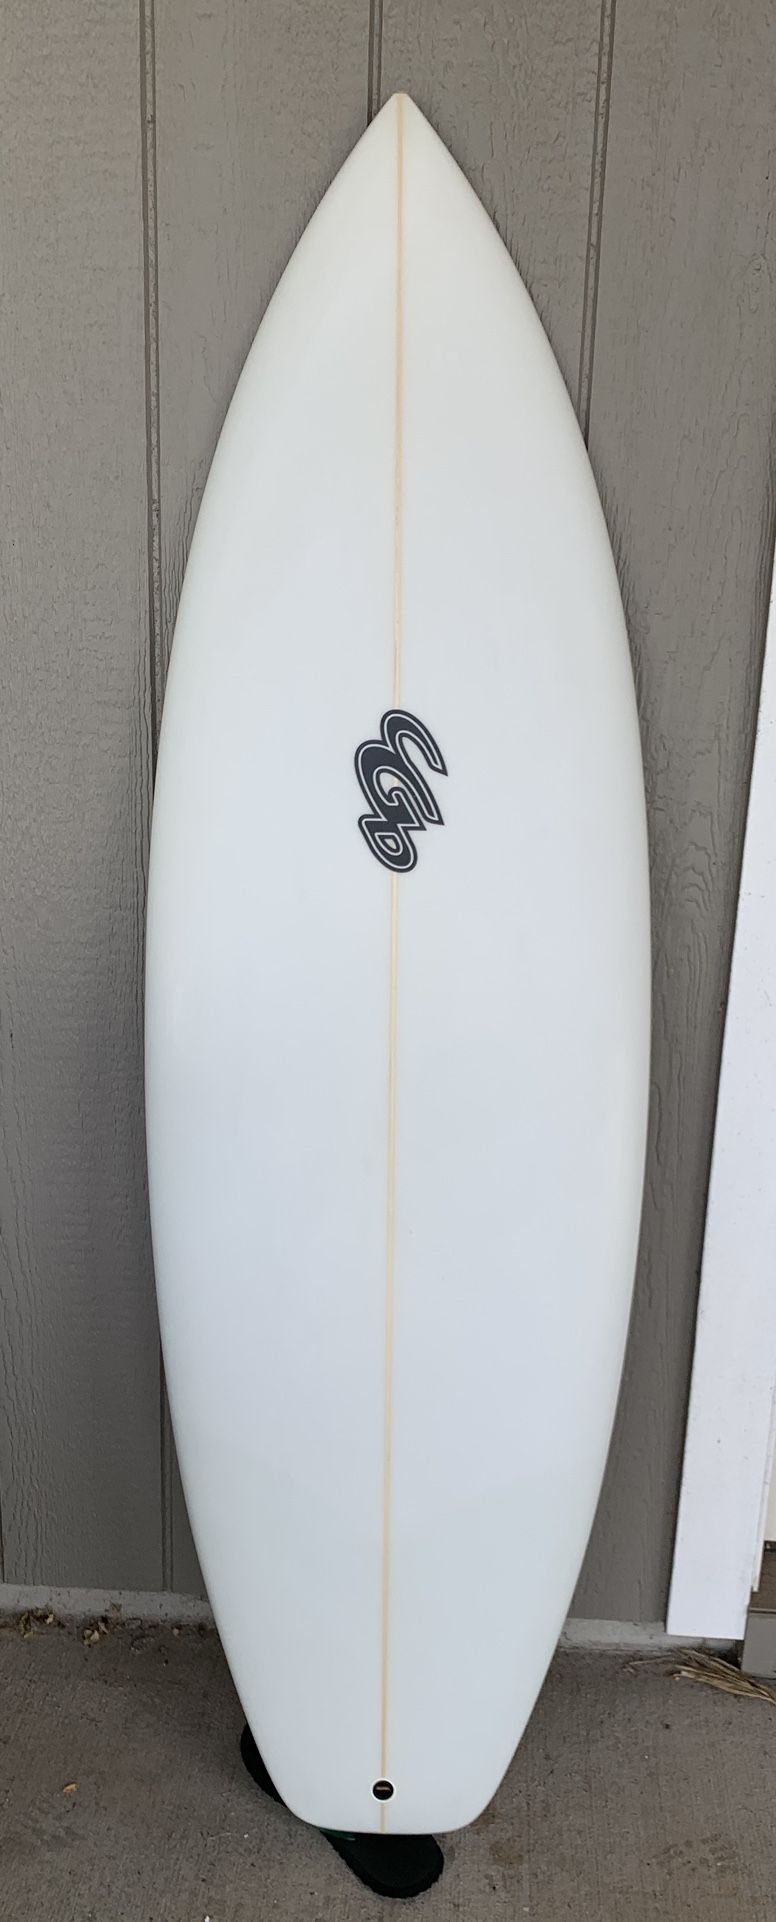 Chris Gallagher Surfboard